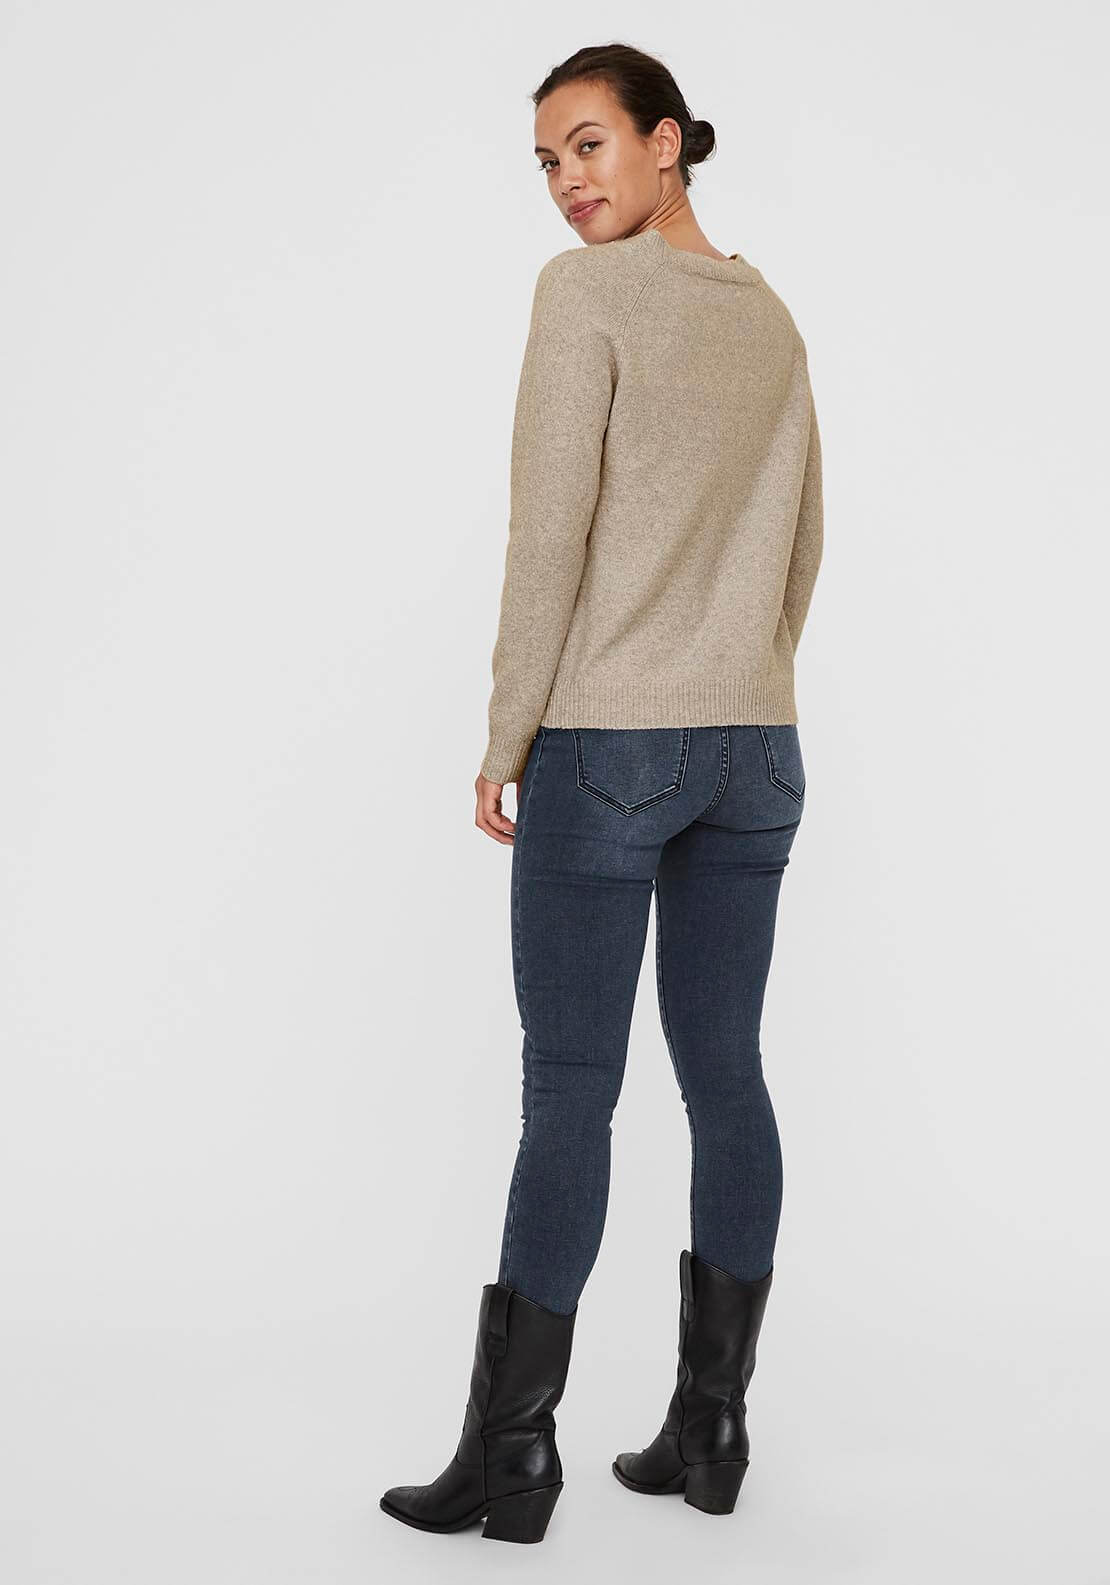 Vero Moda Pullover Jumper - Sepia Tint 2 Shaws Department Stores